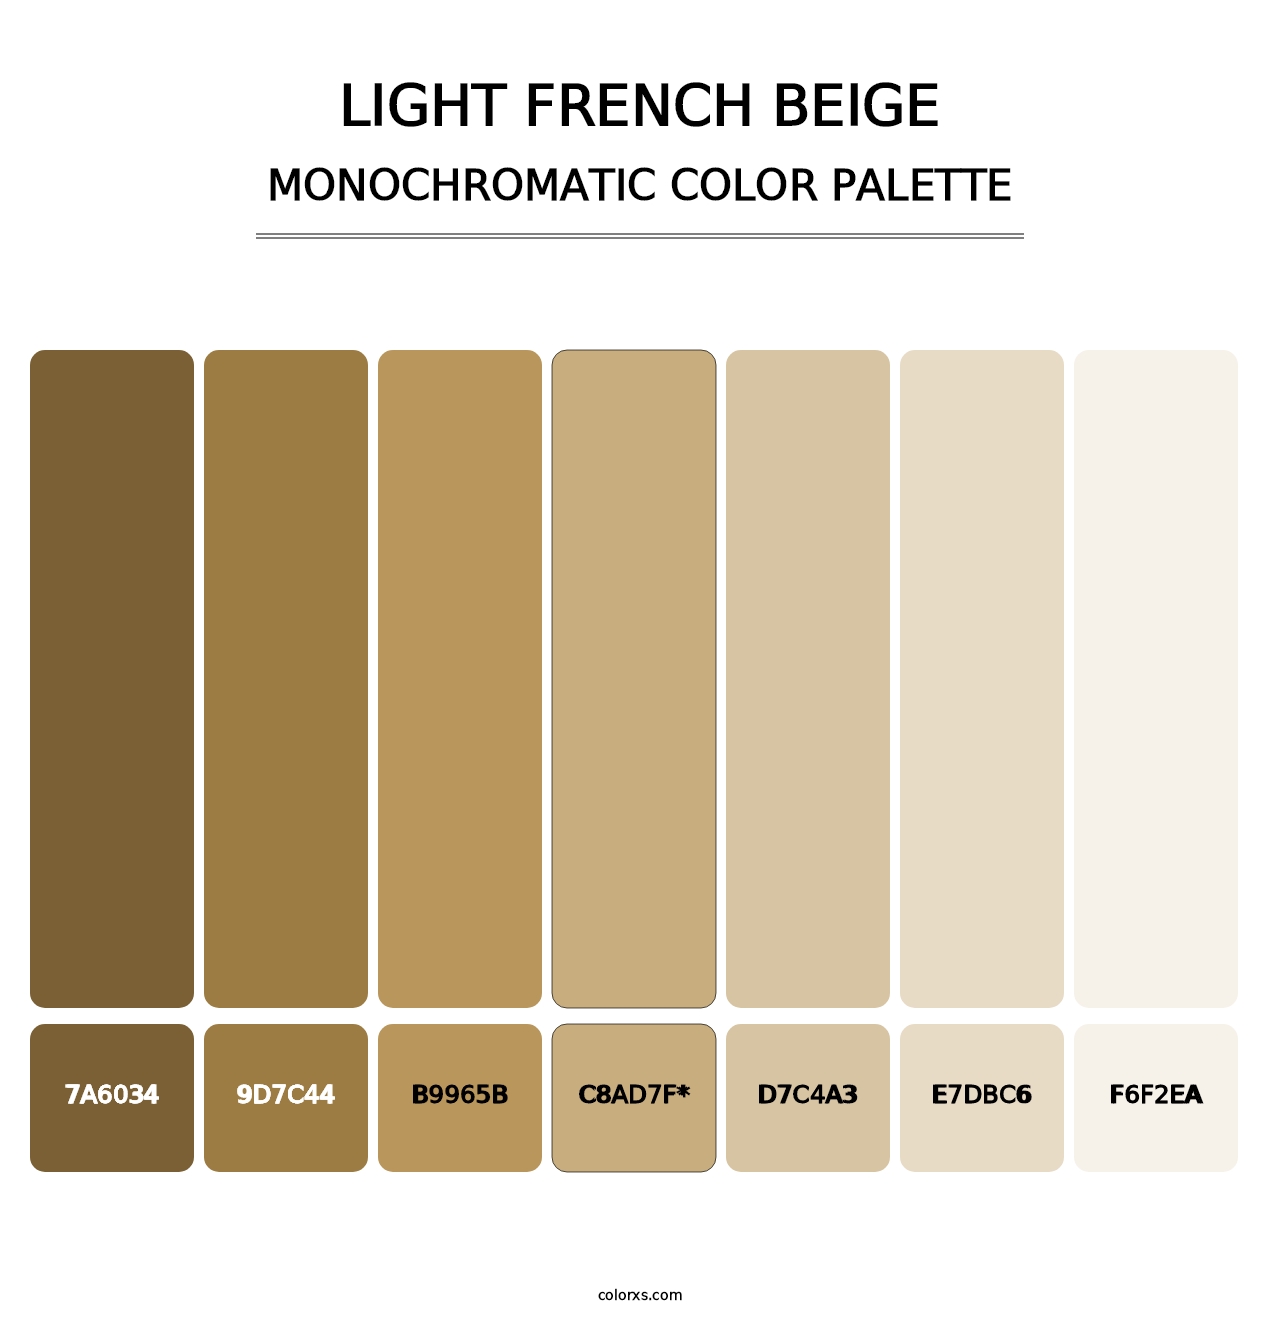 Light French Beige - Monochromatic Color Palette